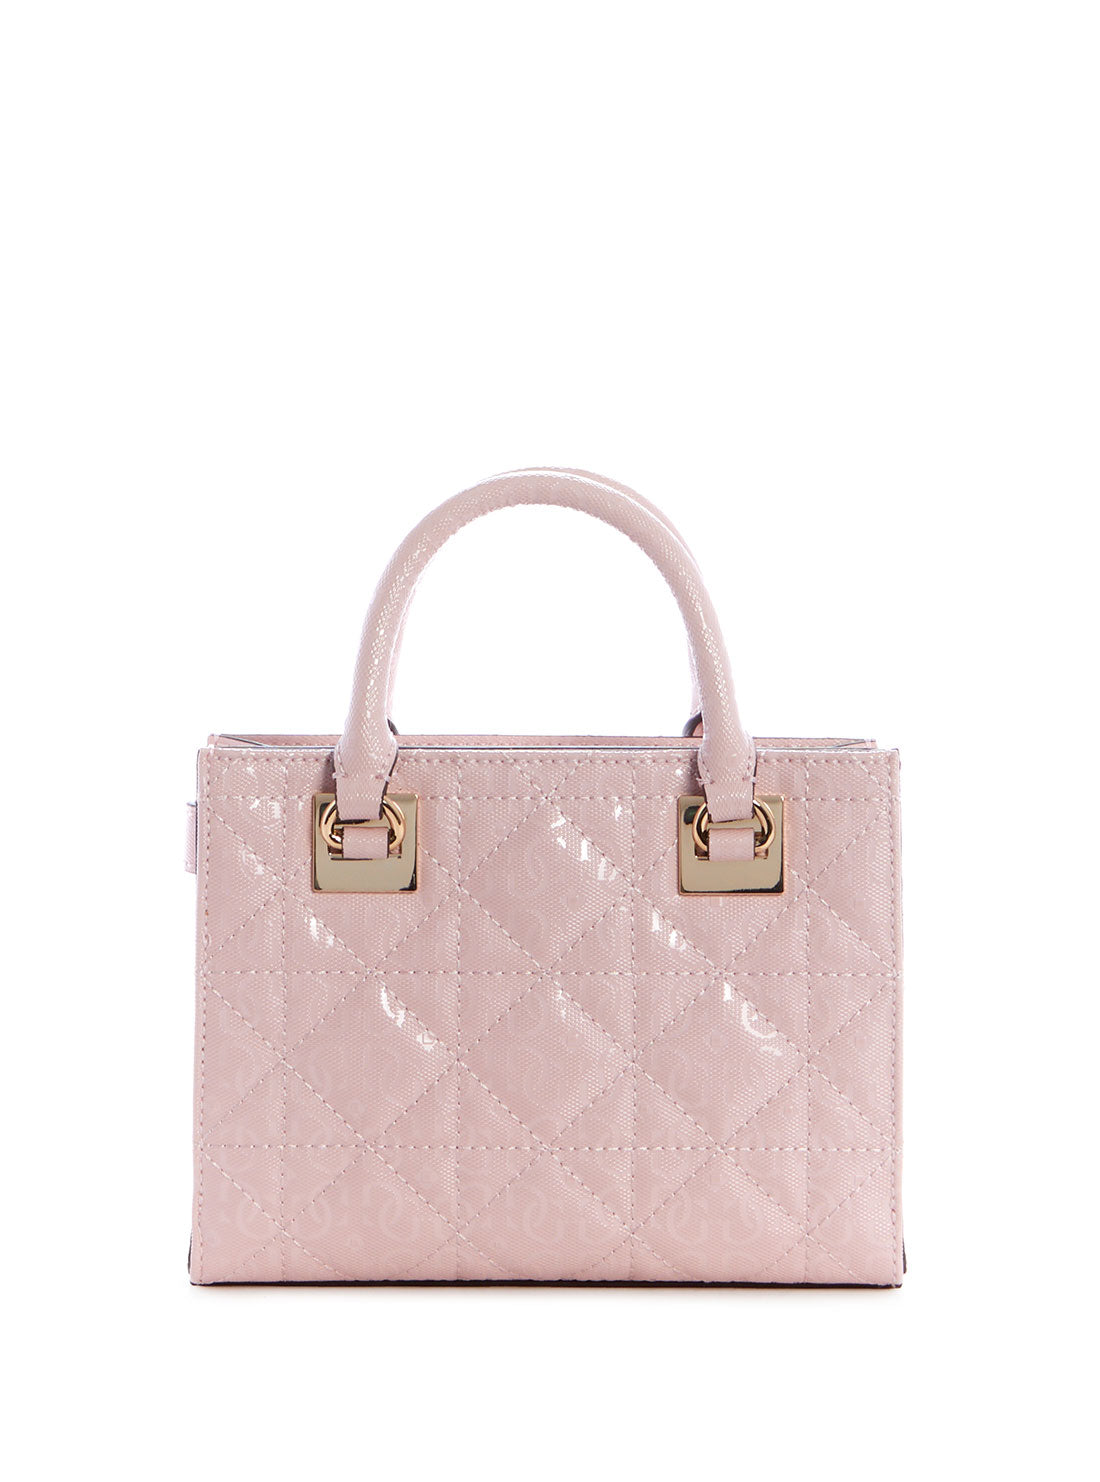 GUESS Womens Pink Malia Mini Satchel Bag GG848876 Back View